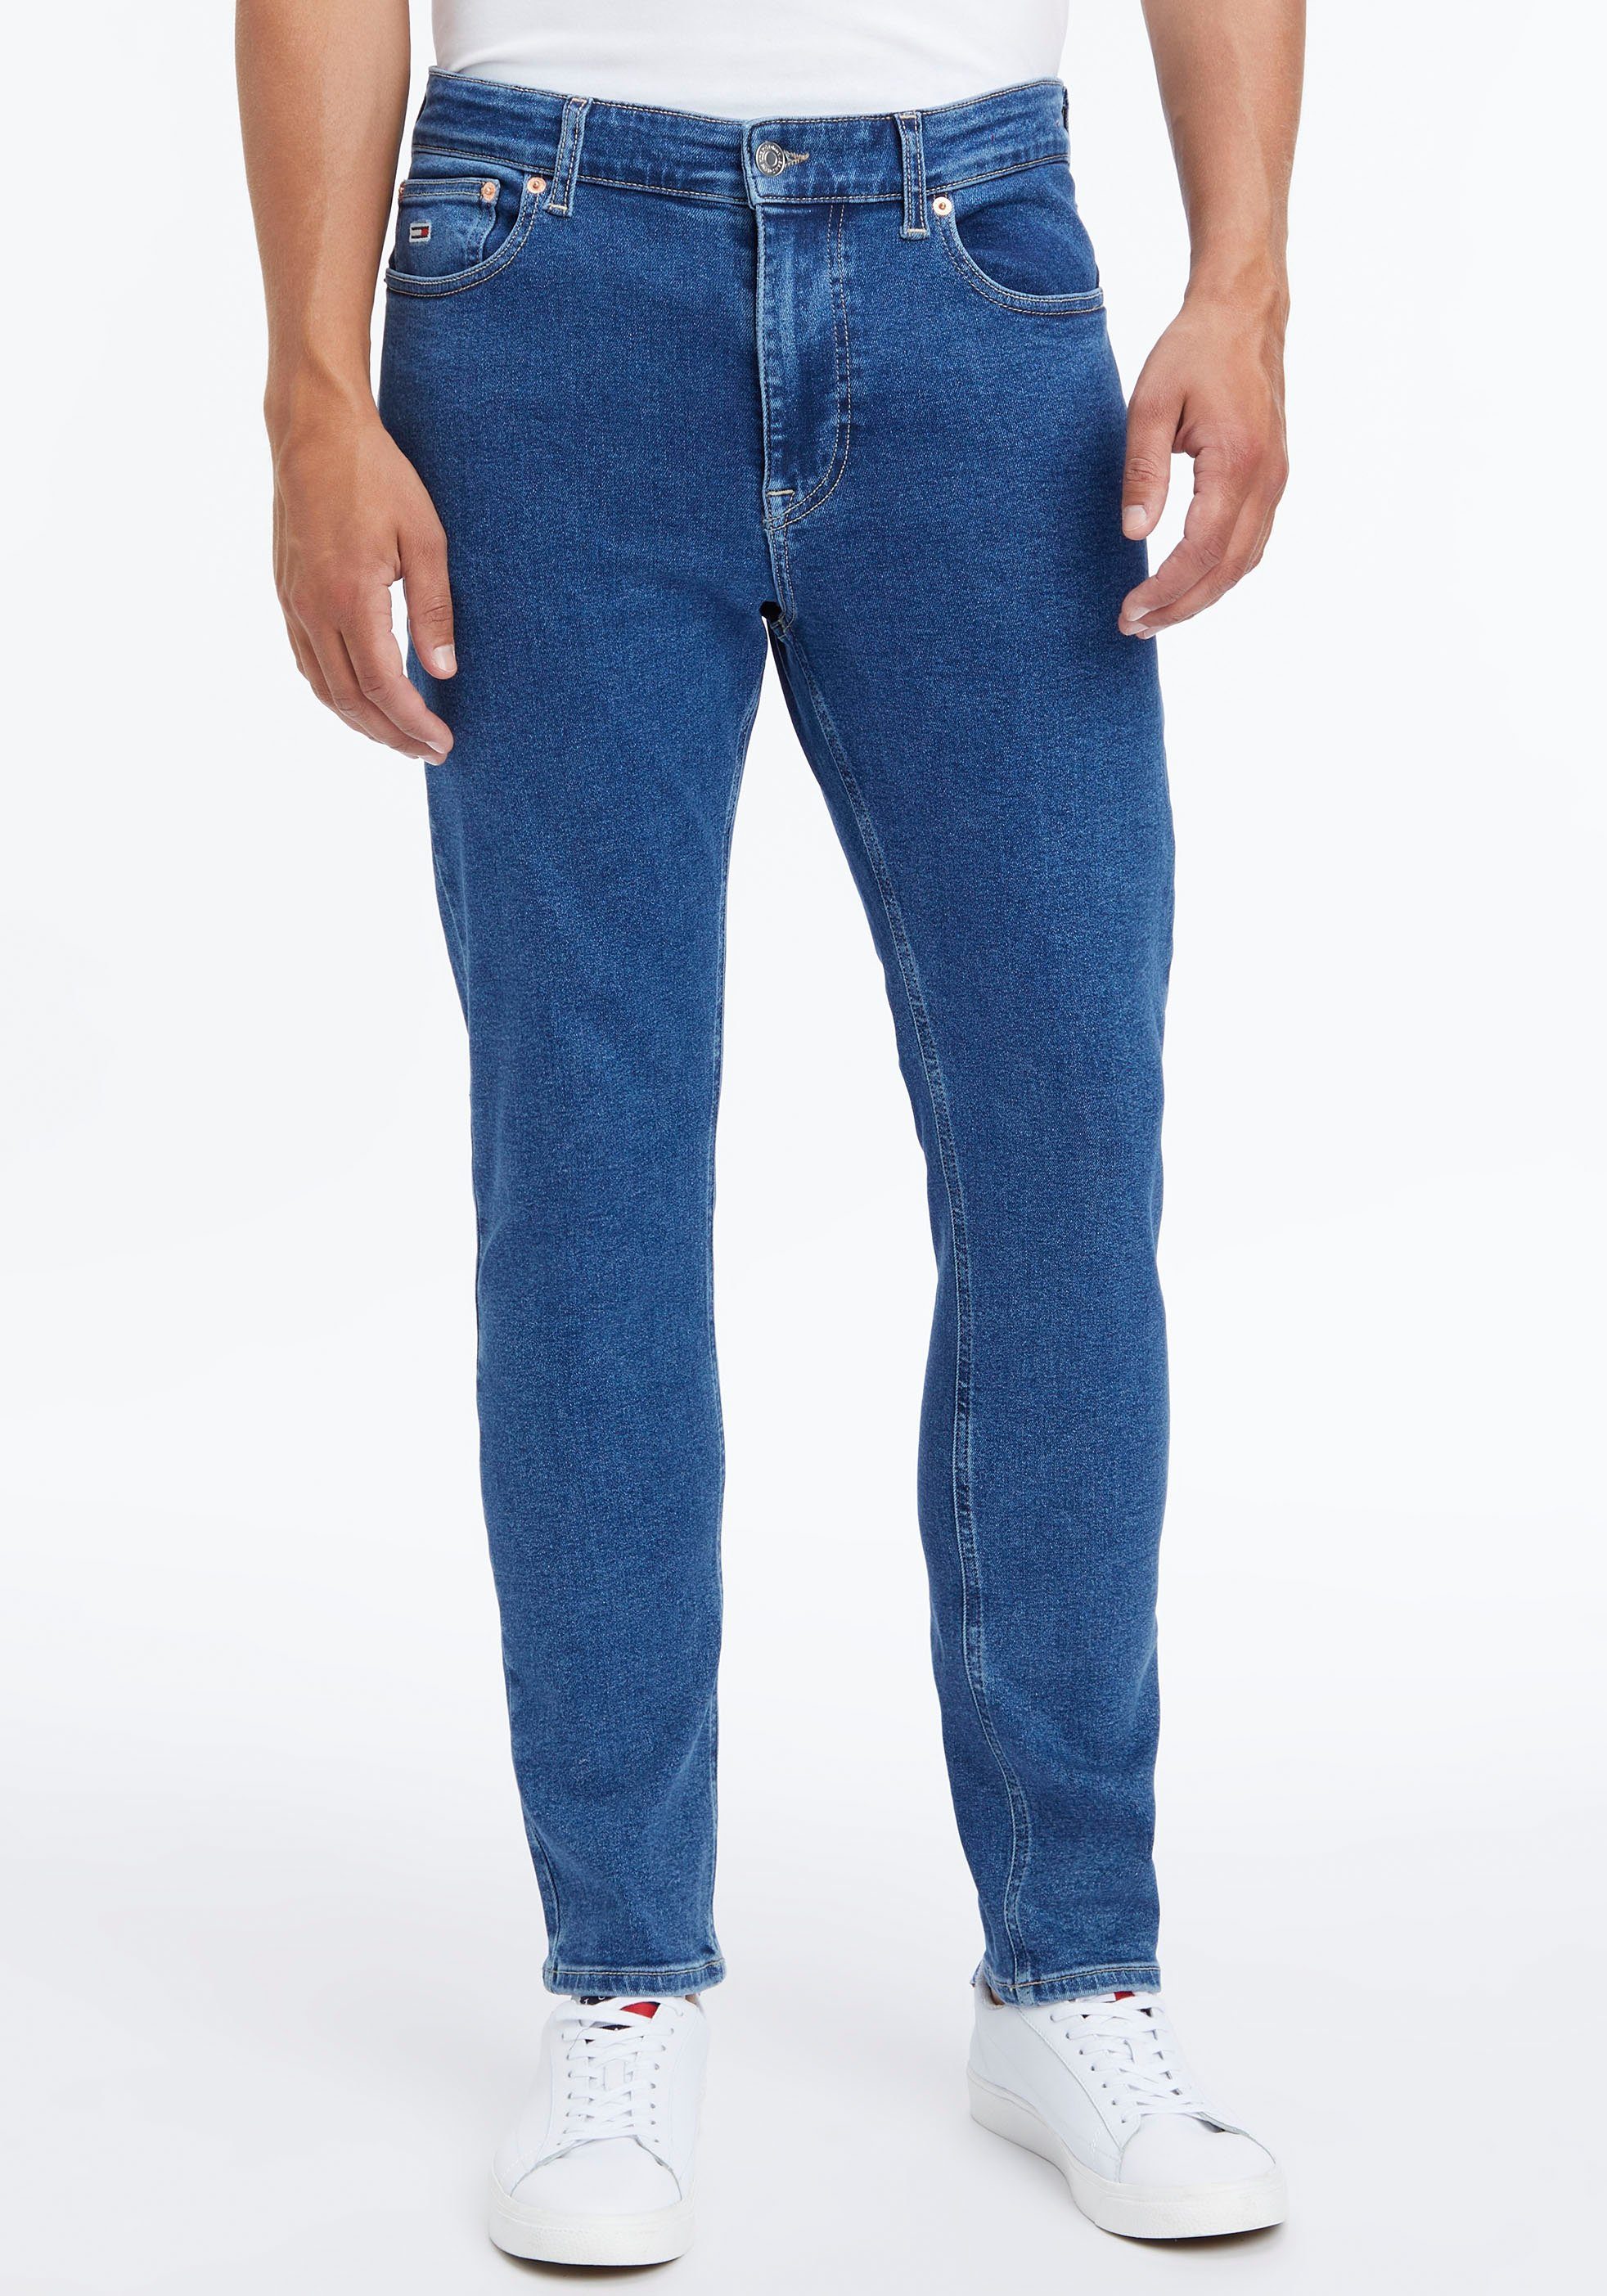 5-Pocket-Jeans Tommy SIMON AG6234 Jeans SKINNY